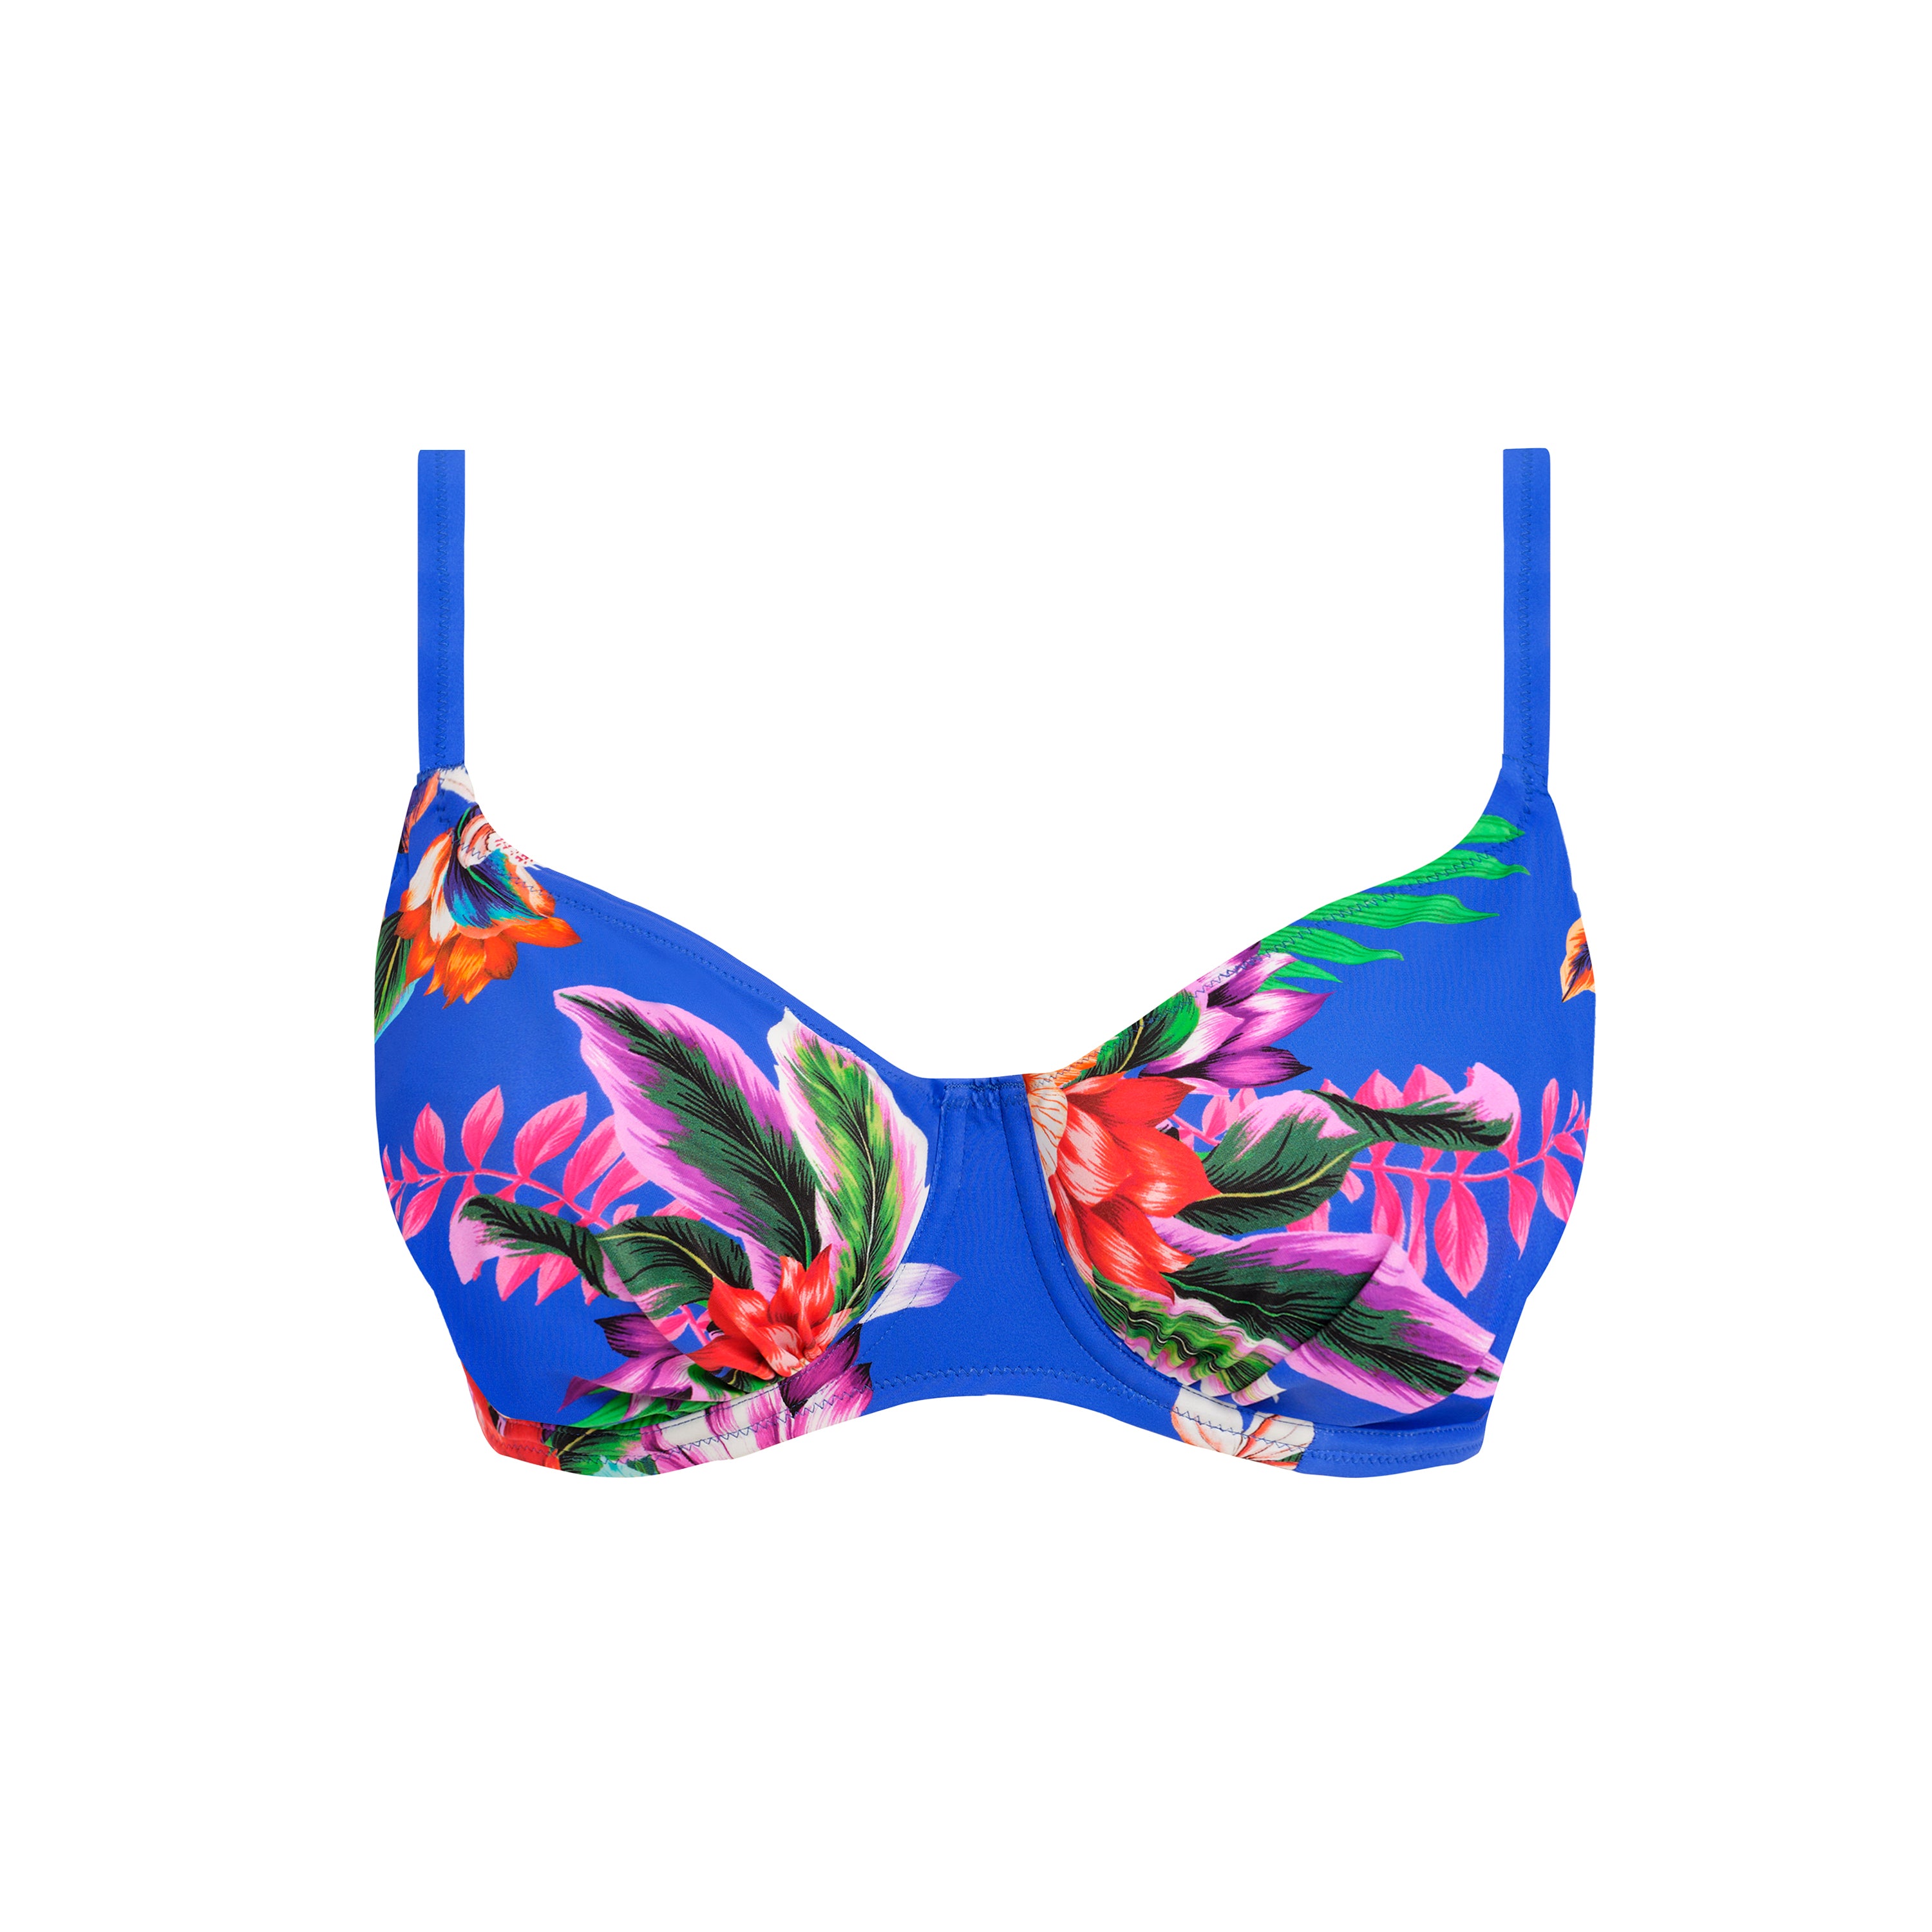 Halkidiki Bandeau Bikini Top by Fantasie, Blue Floral, Bandeau Bikini